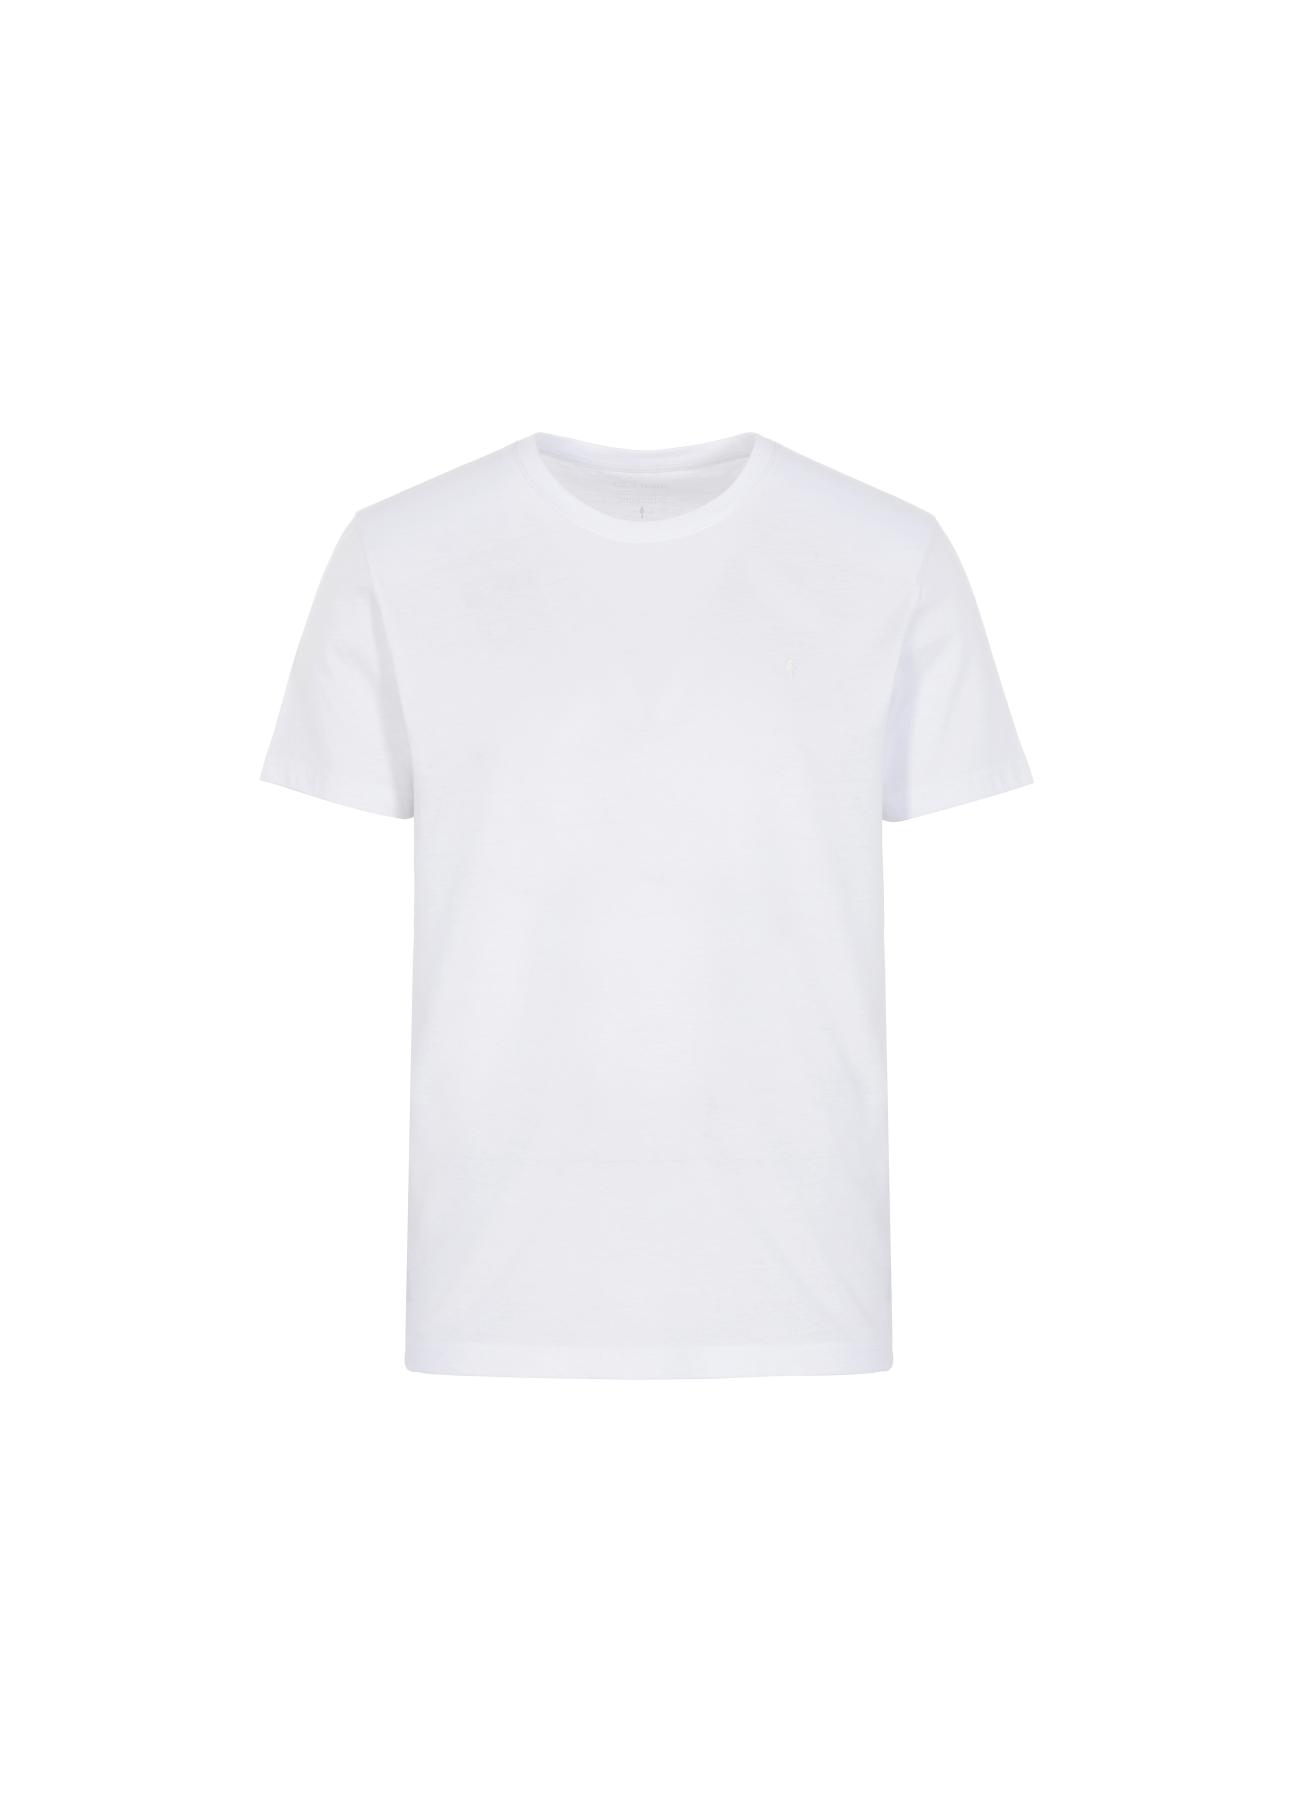 T-shirt męski TSHMT-0065-11(Z21)